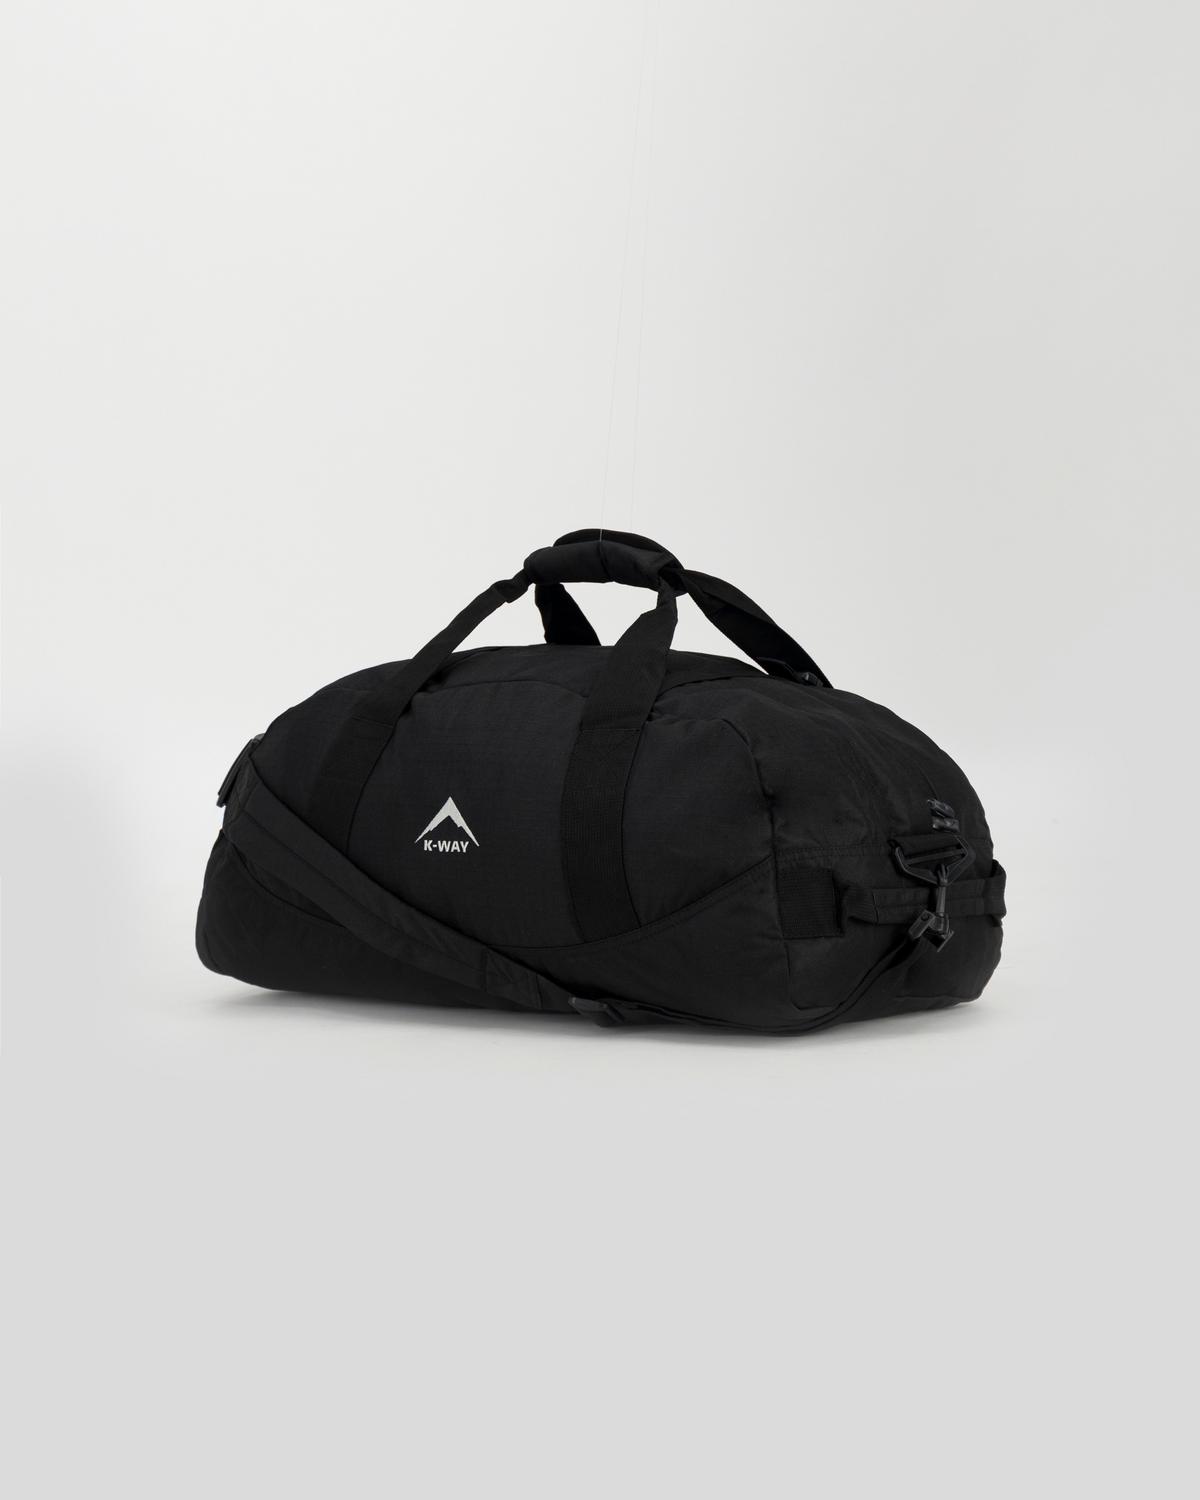 K-Way ECO EVO Small Gear Bag -  Black